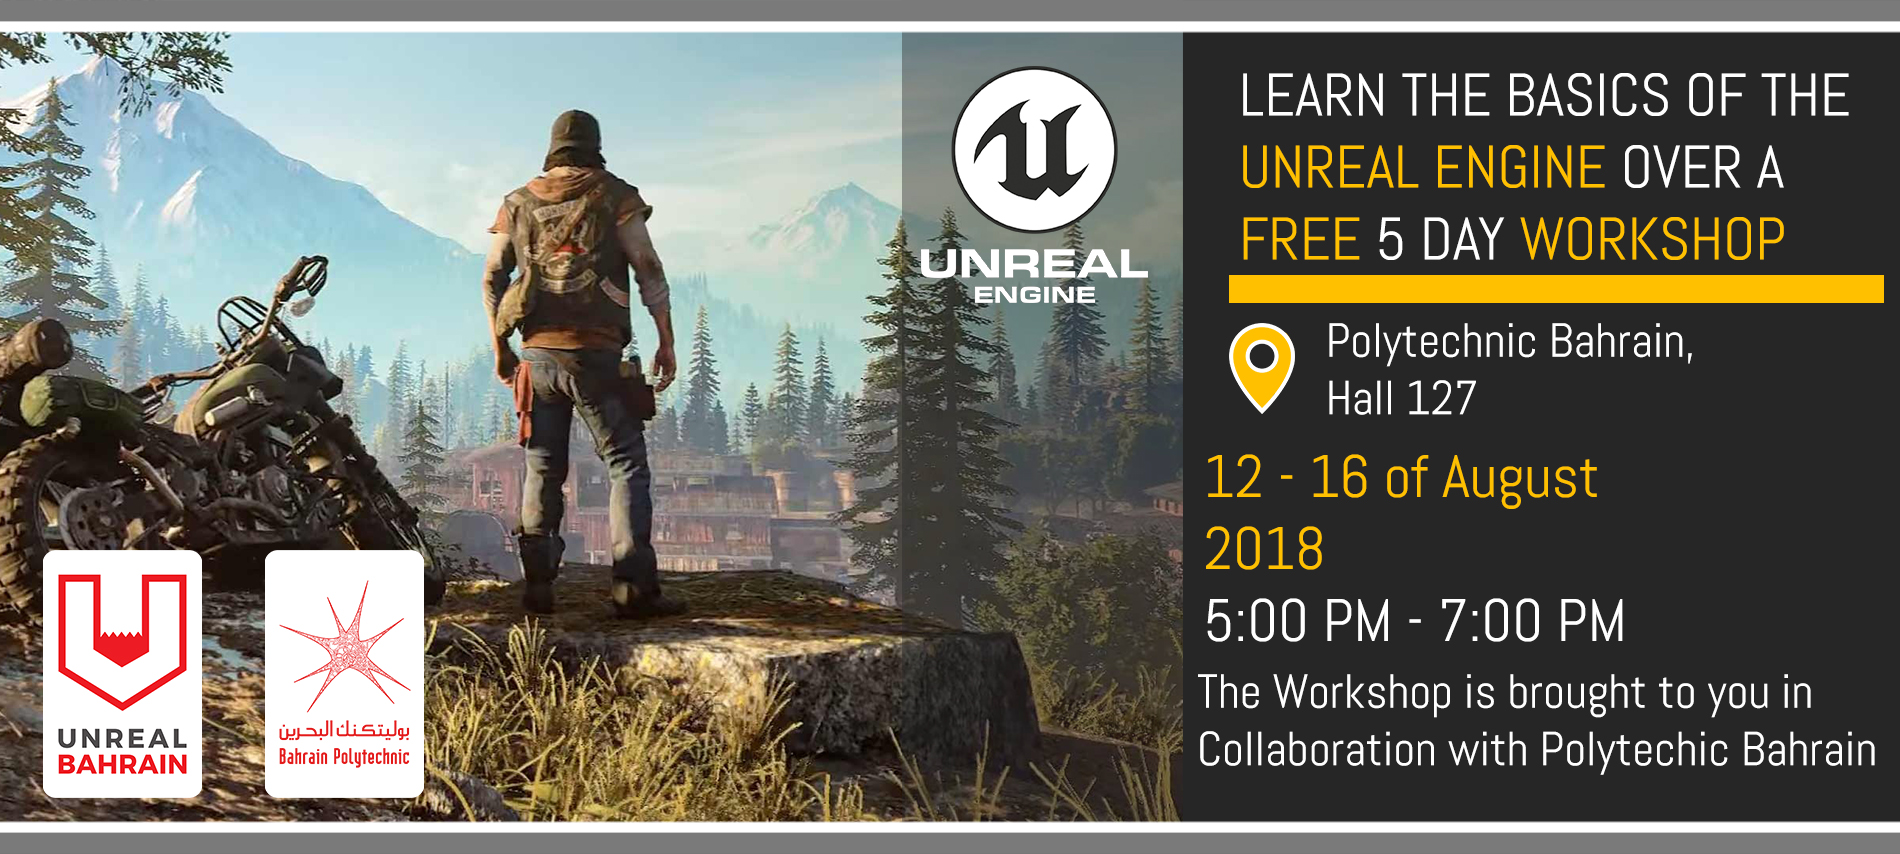 The Basics of Unreal Engine 4 Workshop